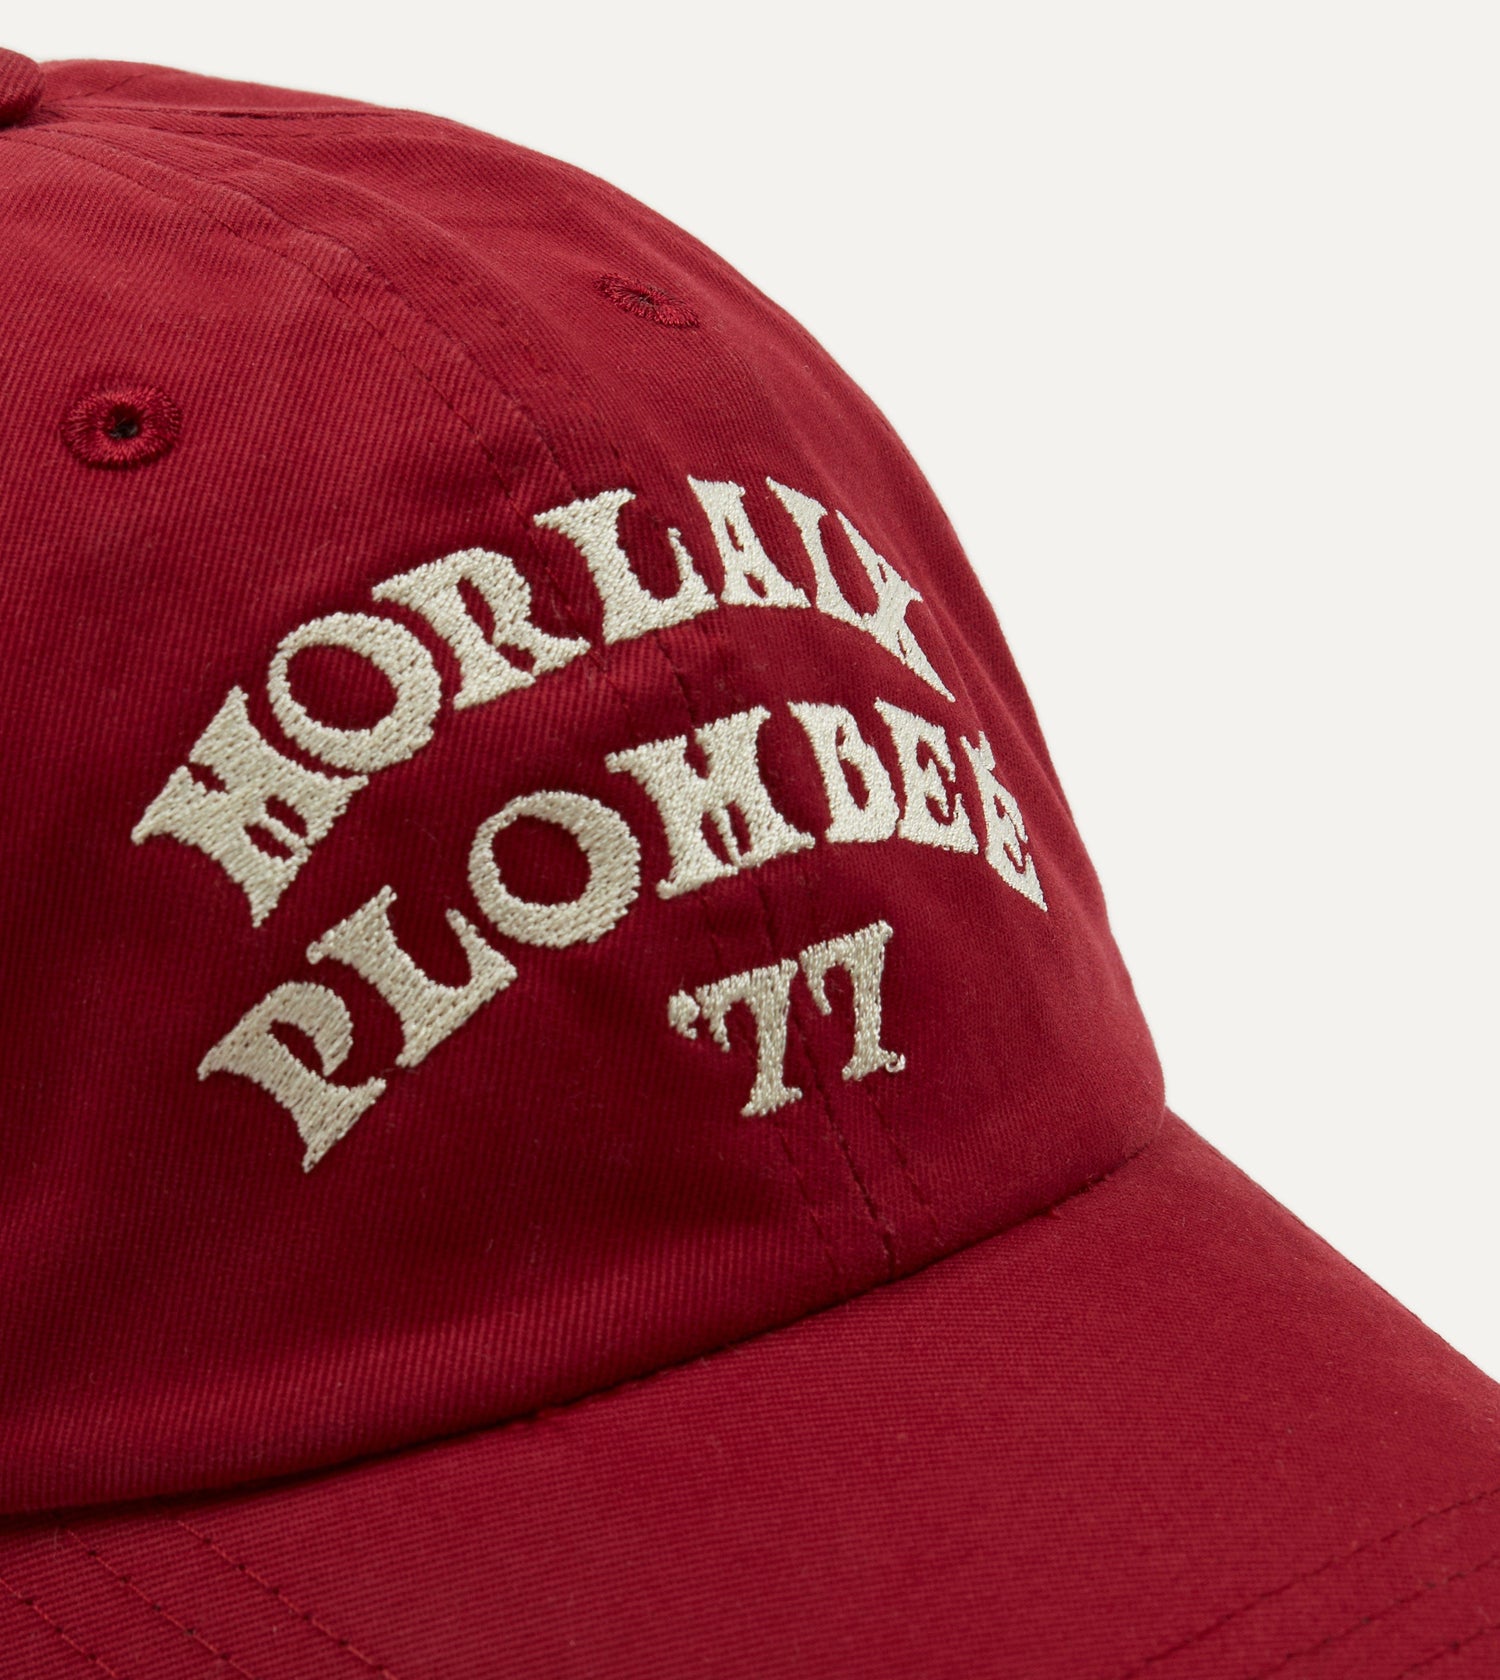 Red Morlaix Plombeé '77 Cotton Twill Baseball Cap